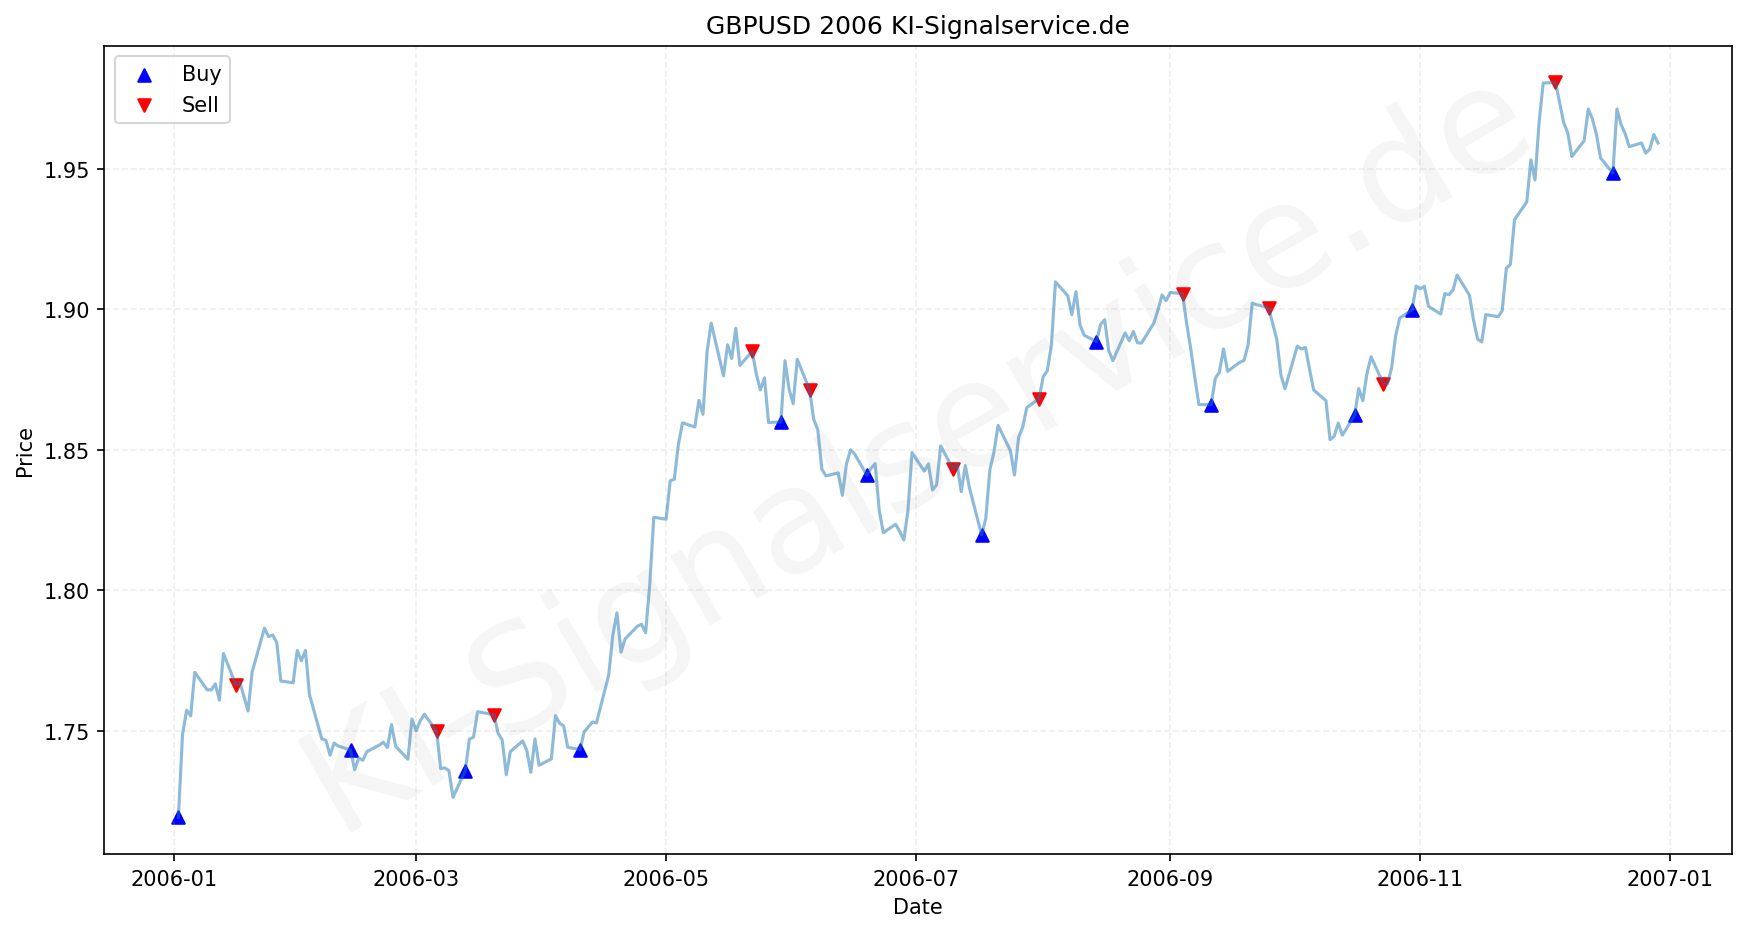 GBPUSD Chart - KI Tradingsignale 2006